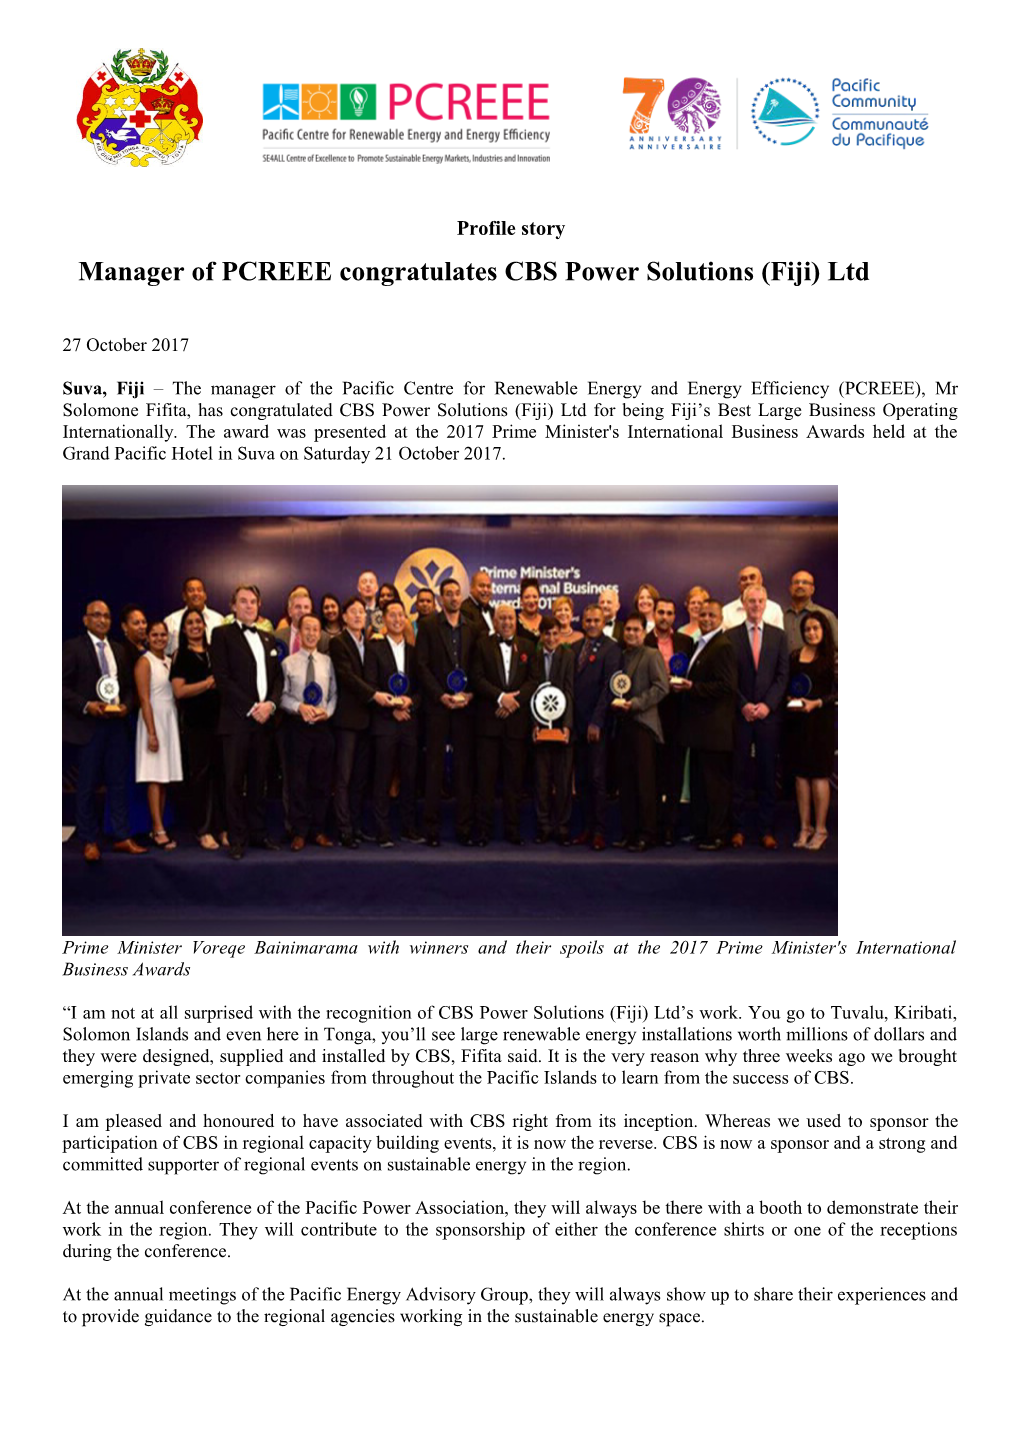 Manager of PCREEE Congratulates CBS Power Solutions (Fiji) Ltd